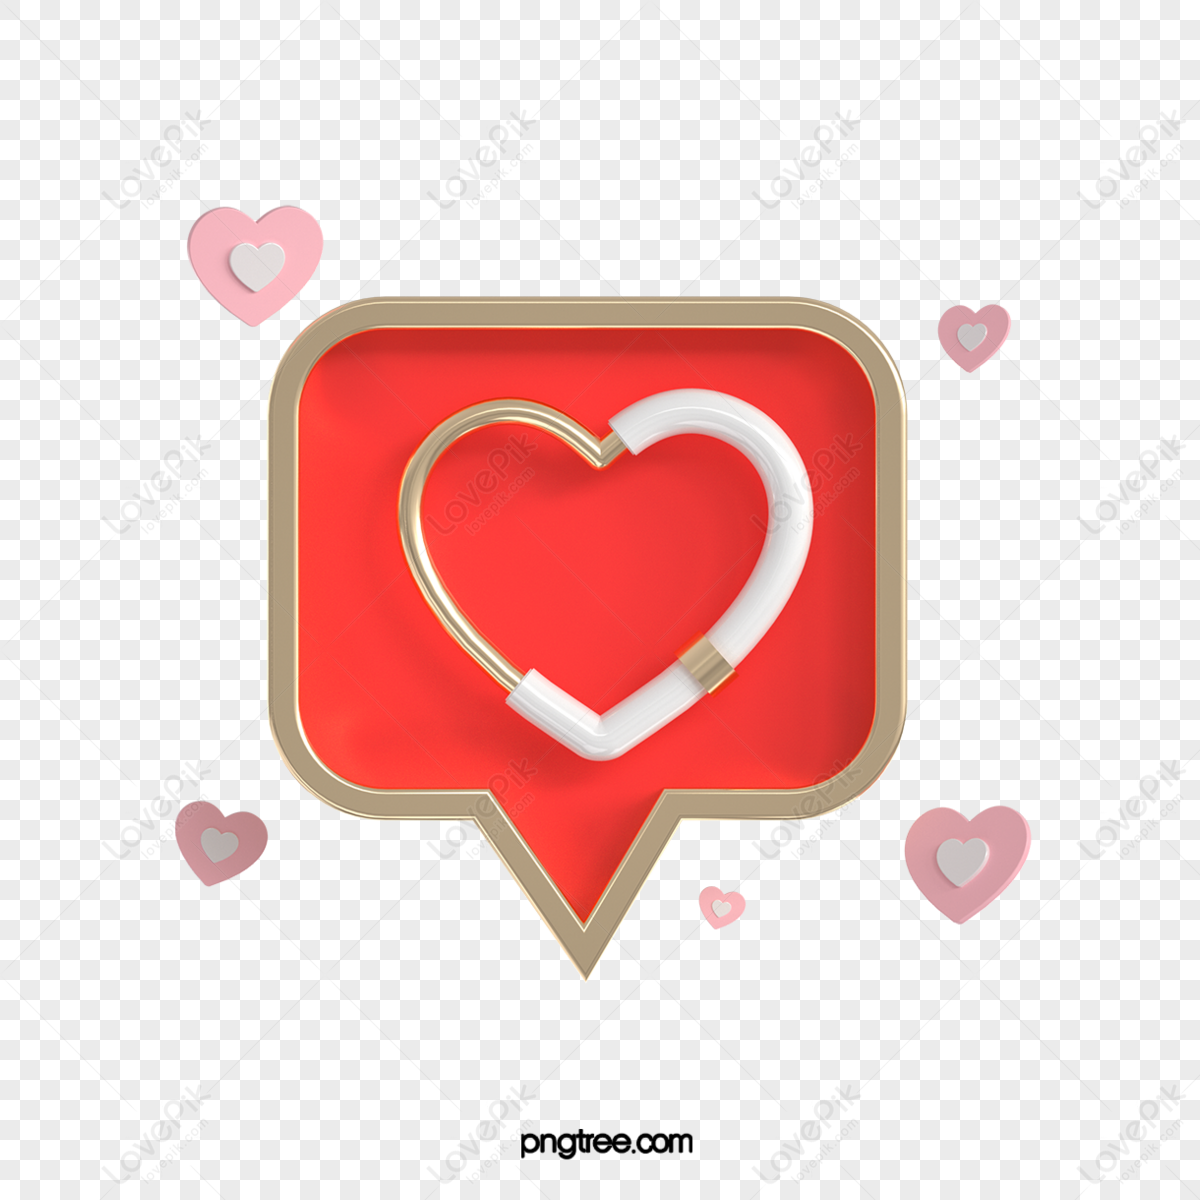 File:Love's logo.svg - Wikipedia